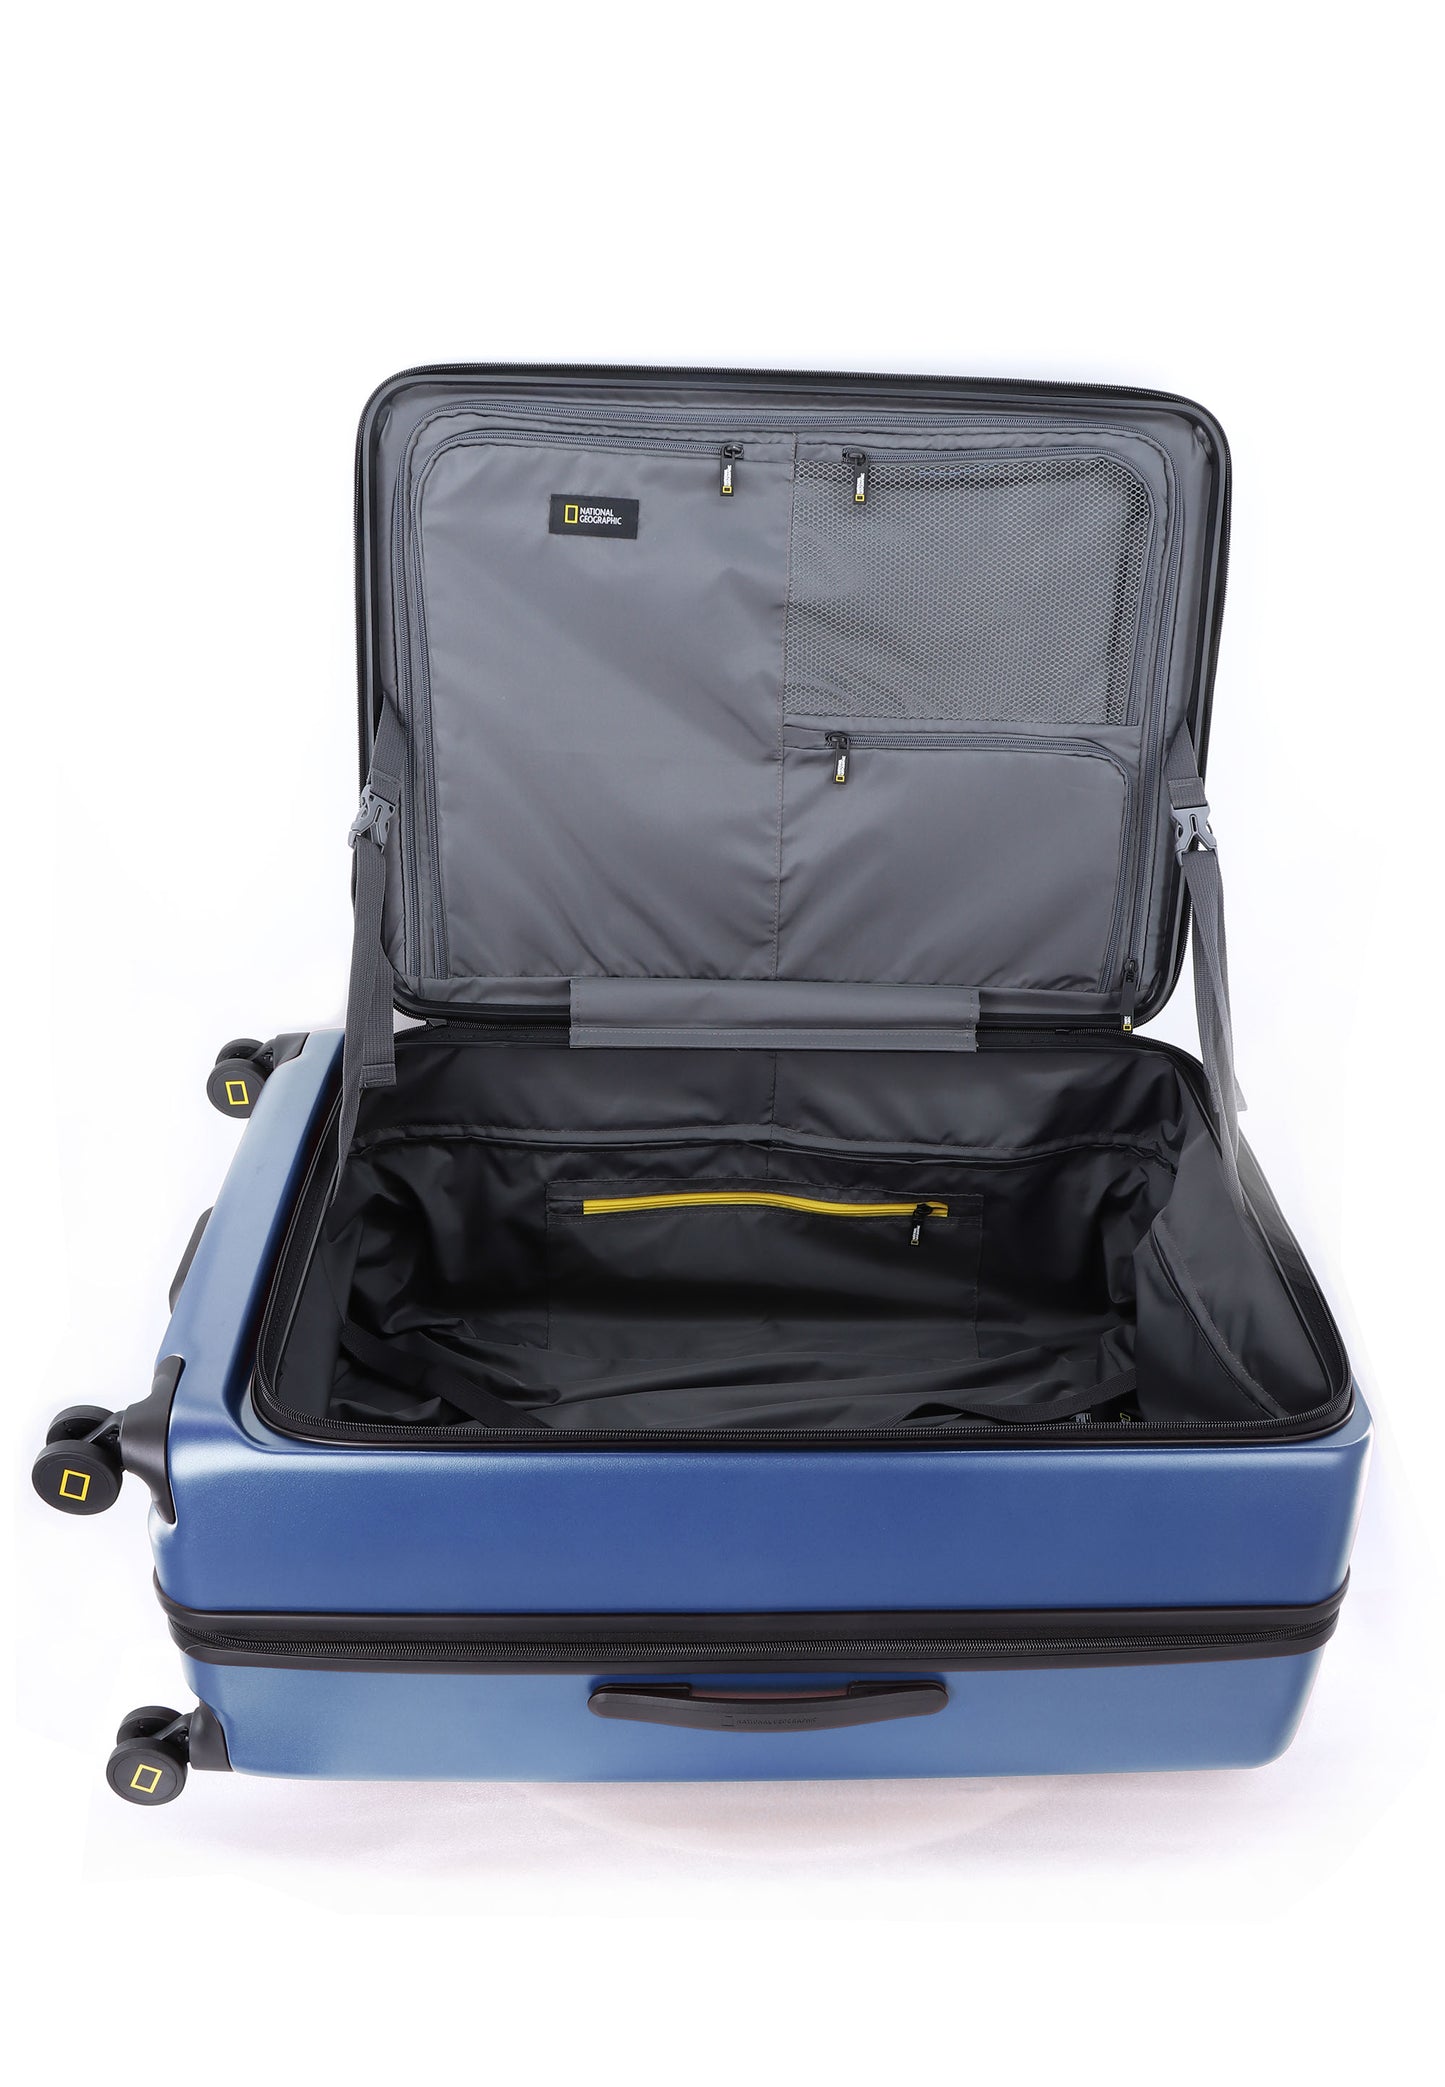 National Geographic Expandable Hard Case / Trolley / Travel Case - 79 cm (Extra-Large) - Lodge - Bleu